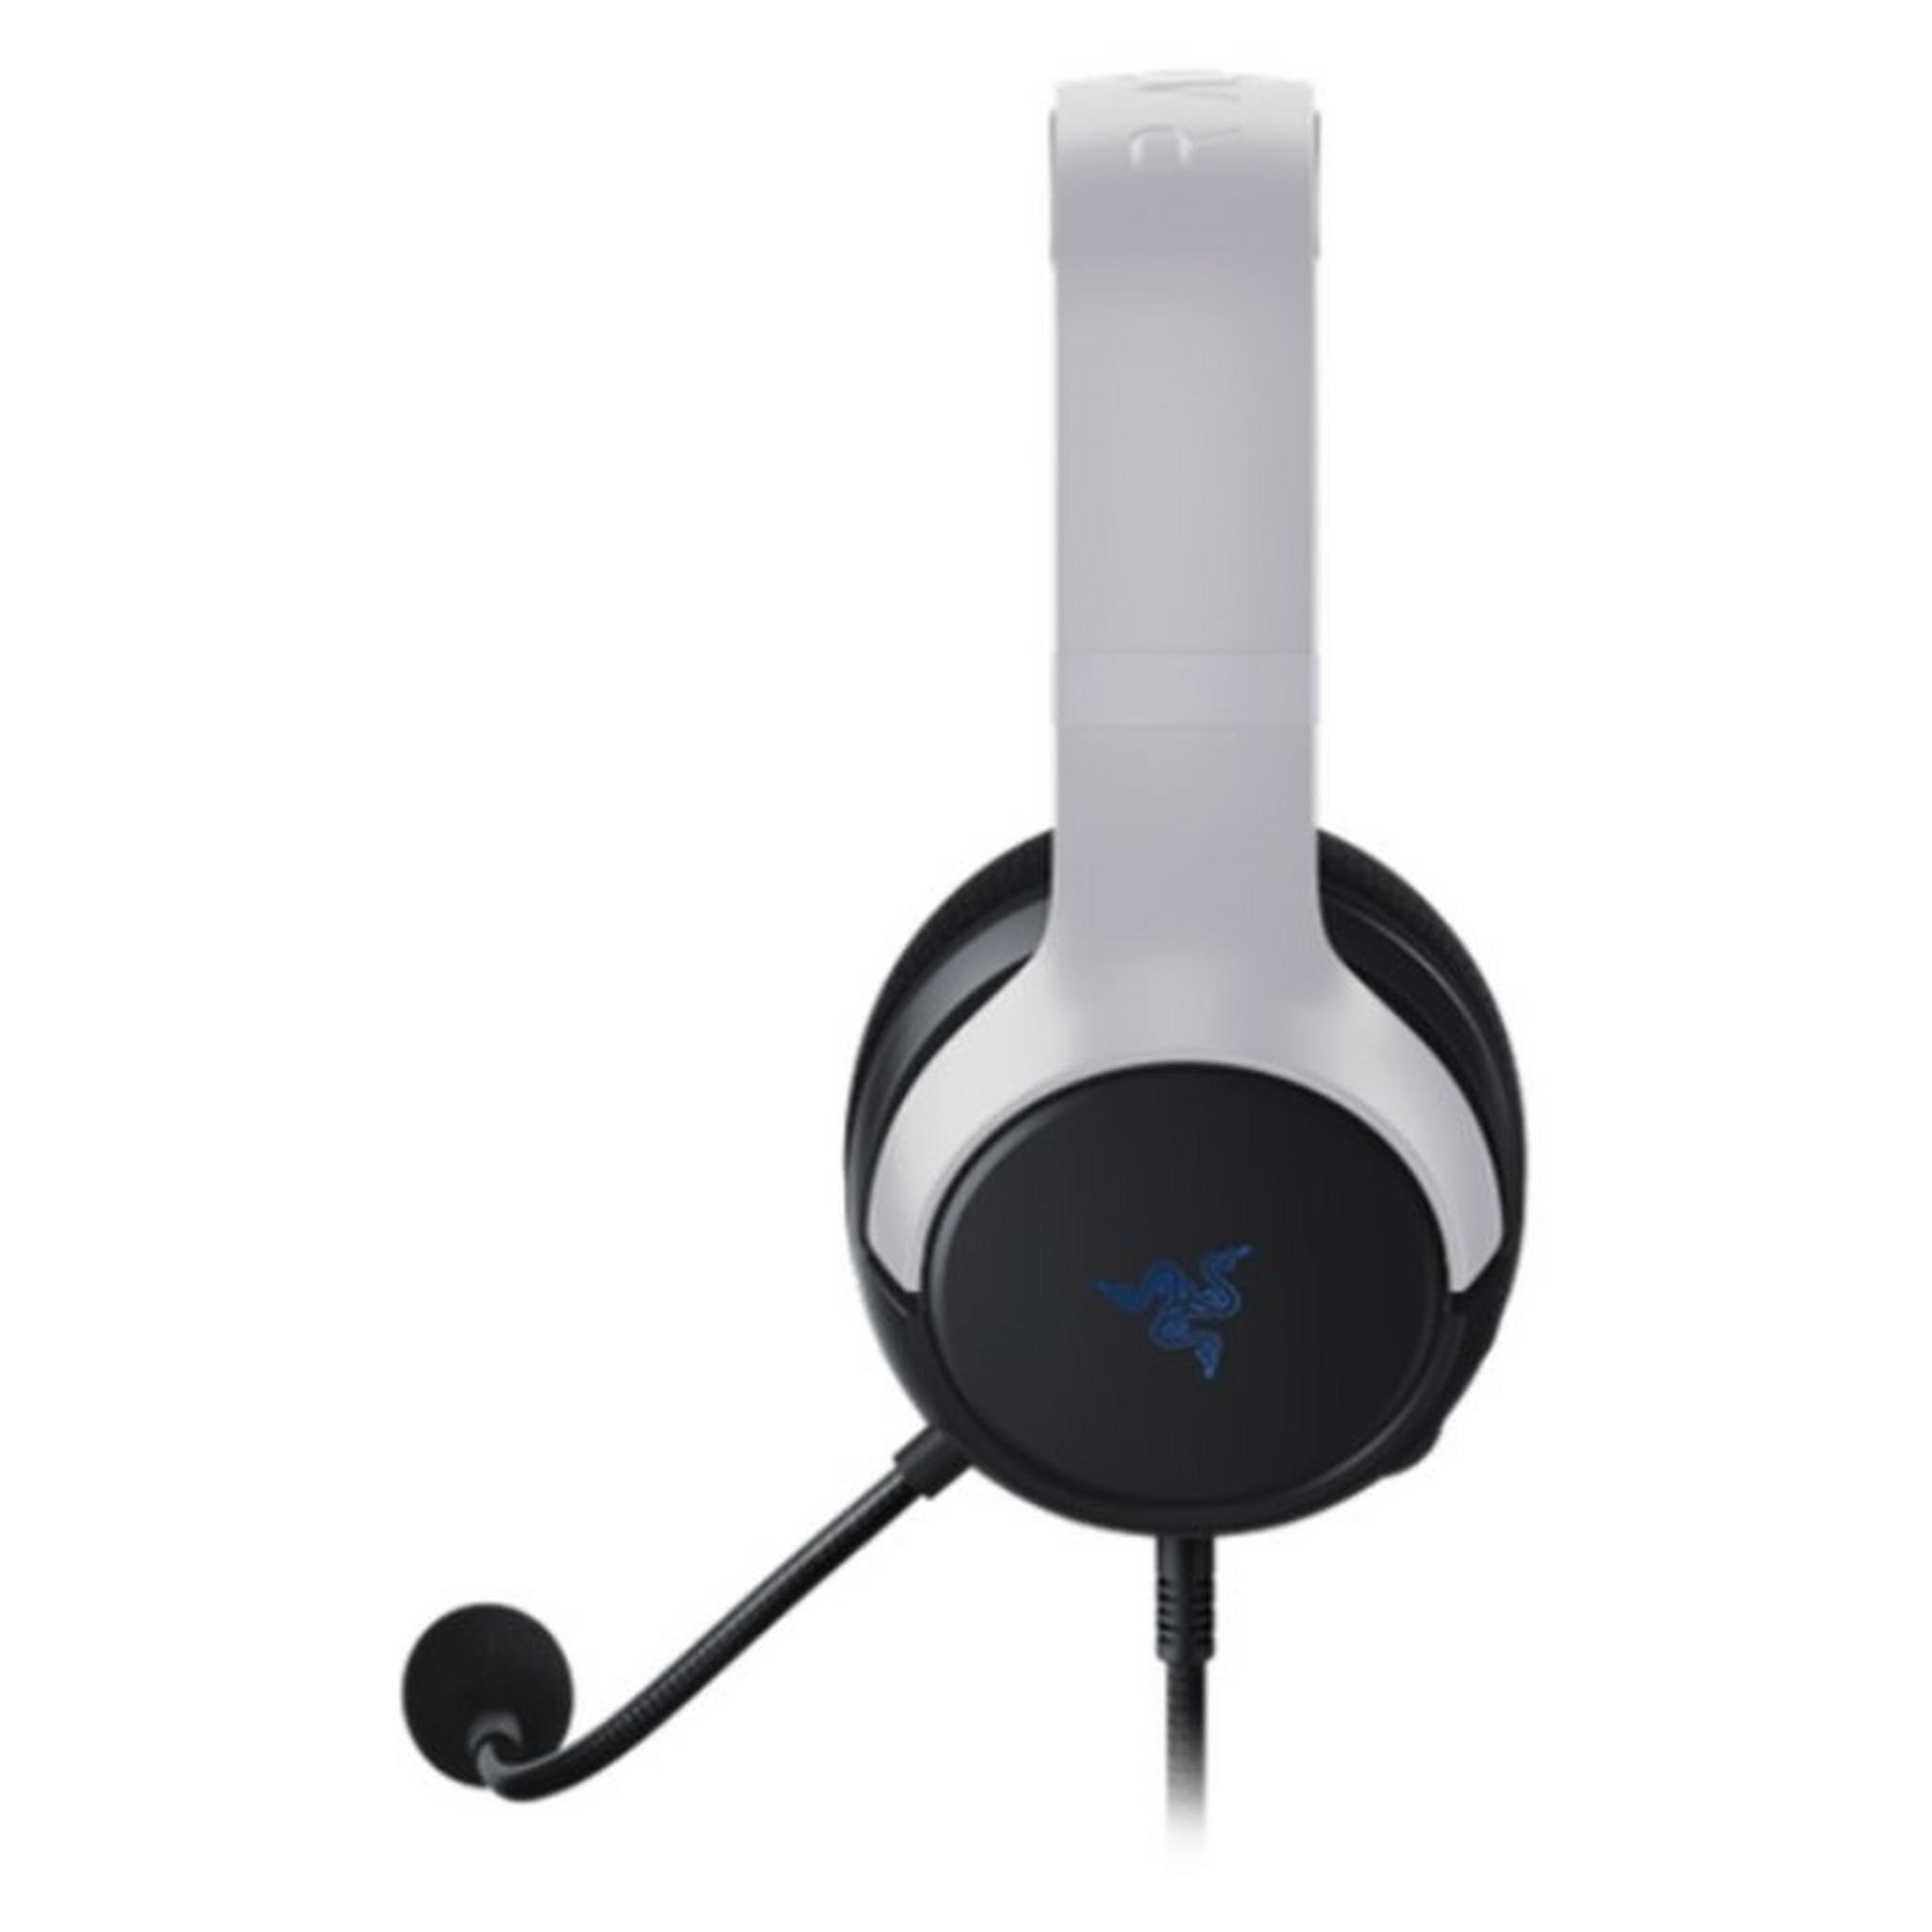 Razer Kaira Wireless Gaming Headset for PlayStation